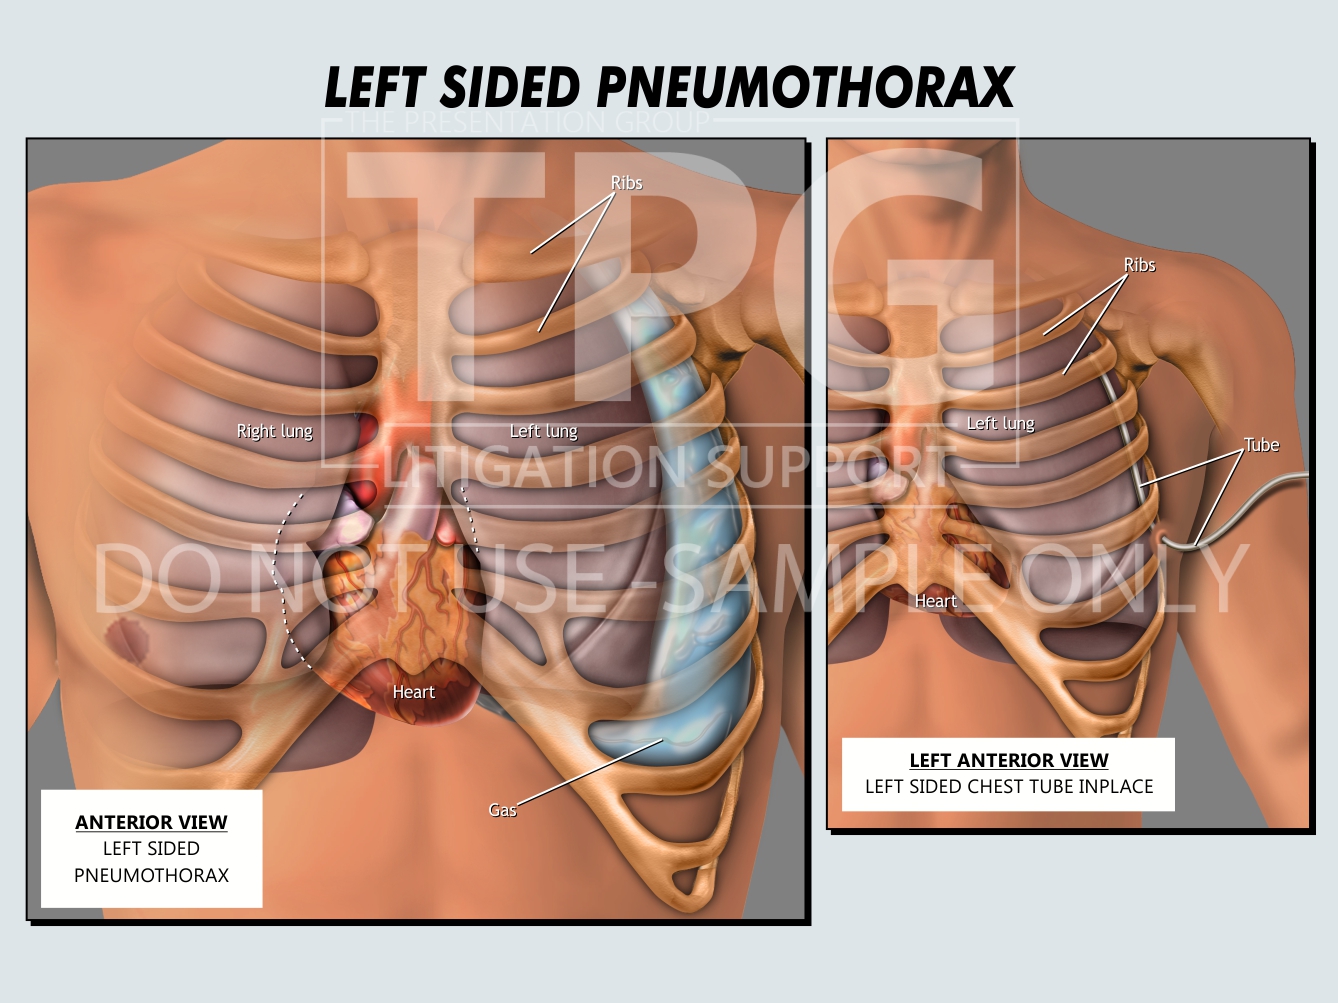 Pneumothorax/Medical Illustration - Presentation Group